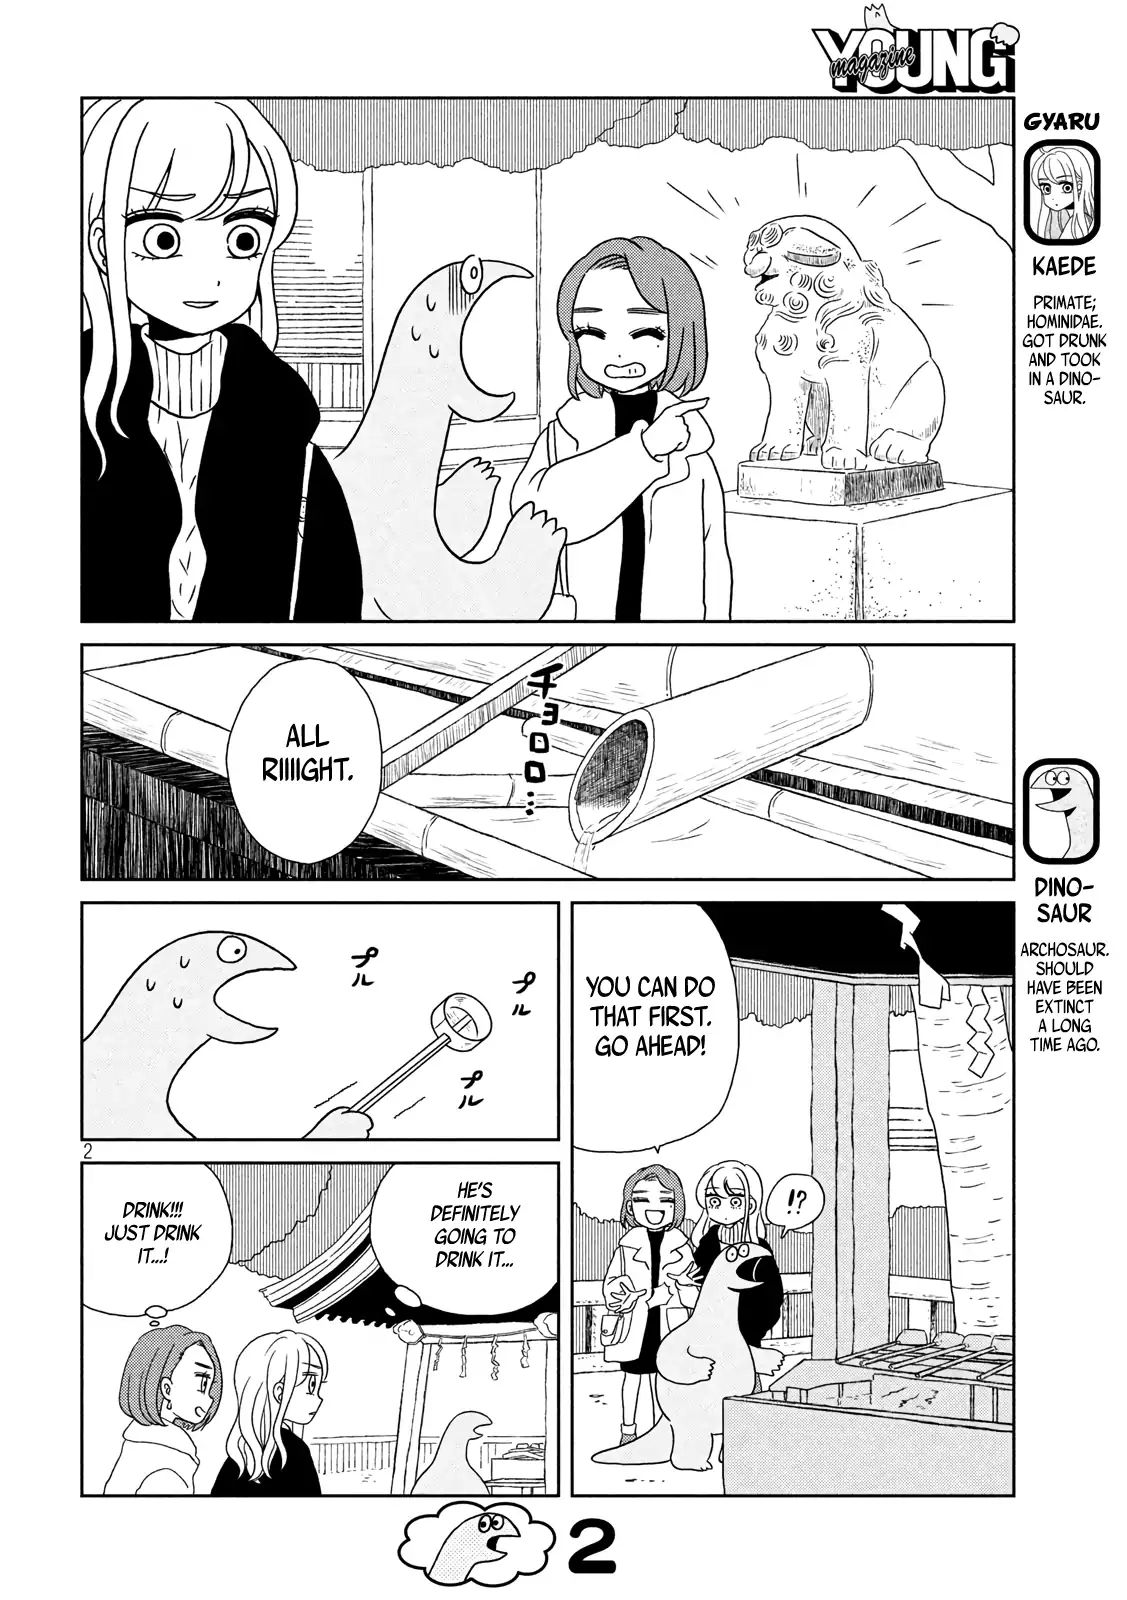 Gyaru And Dinosaur - Page 2